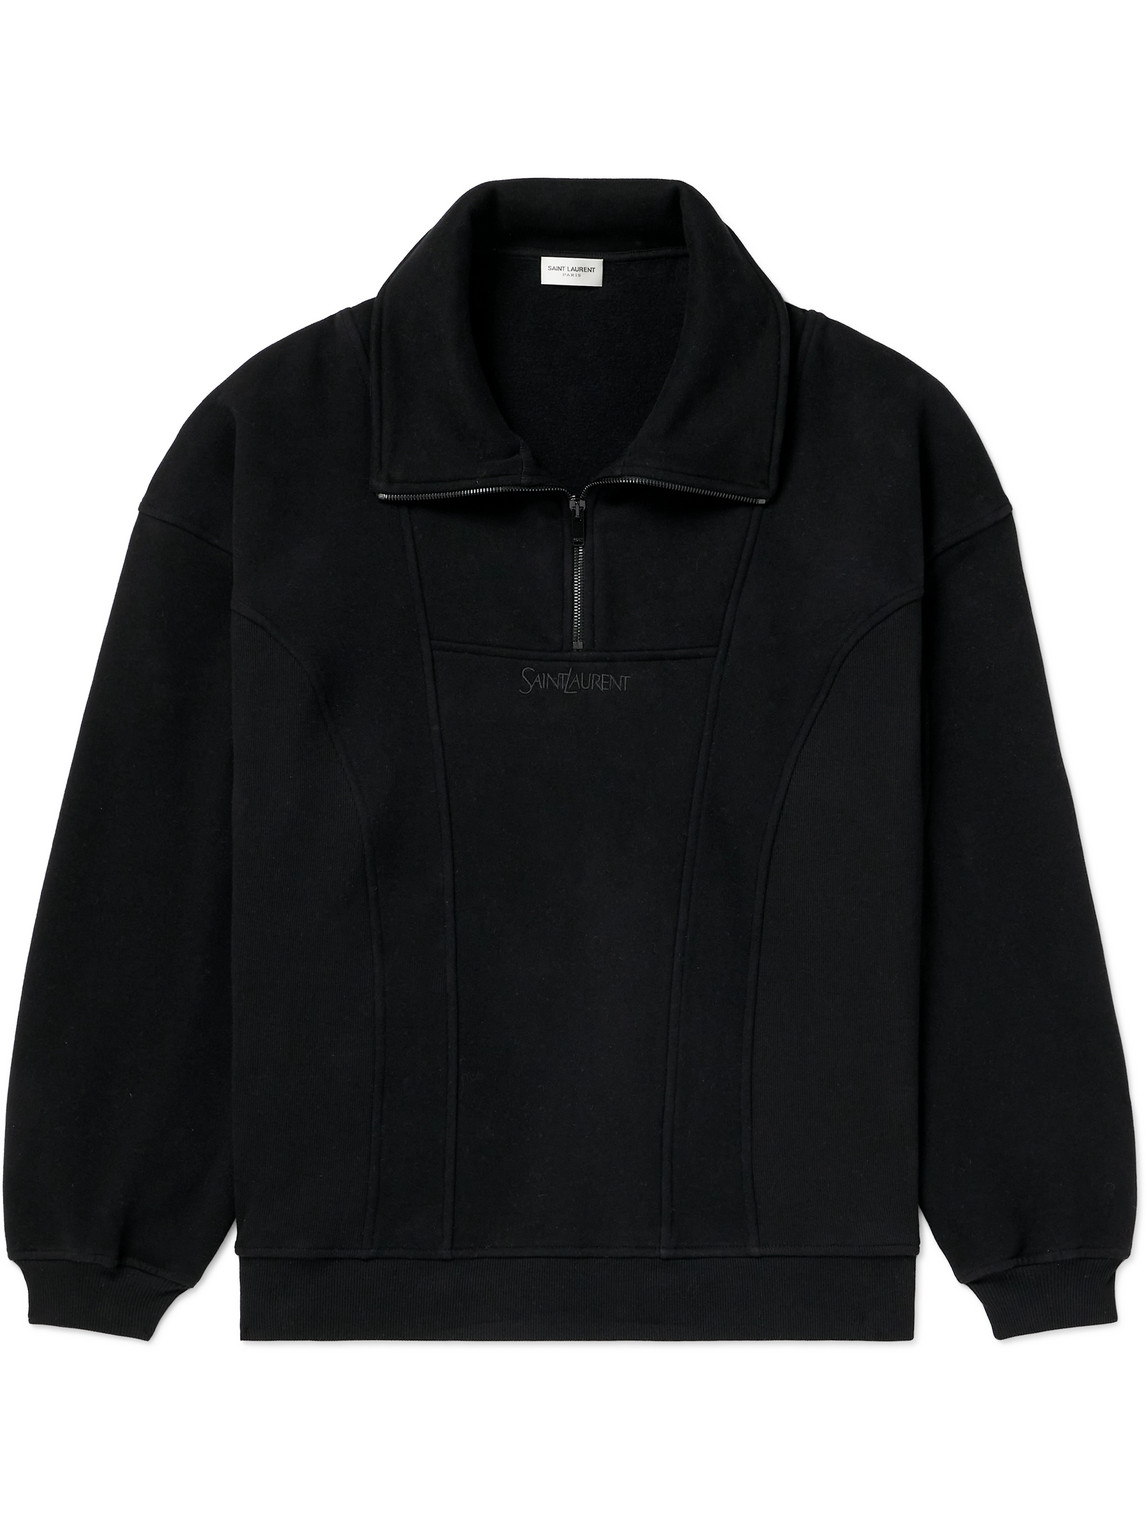 SAINT LAURENT - Logo-Embroidered Cotton-Jersey Half-Zip Sweatshirt - Men - Black - L von SAINT LAURENT